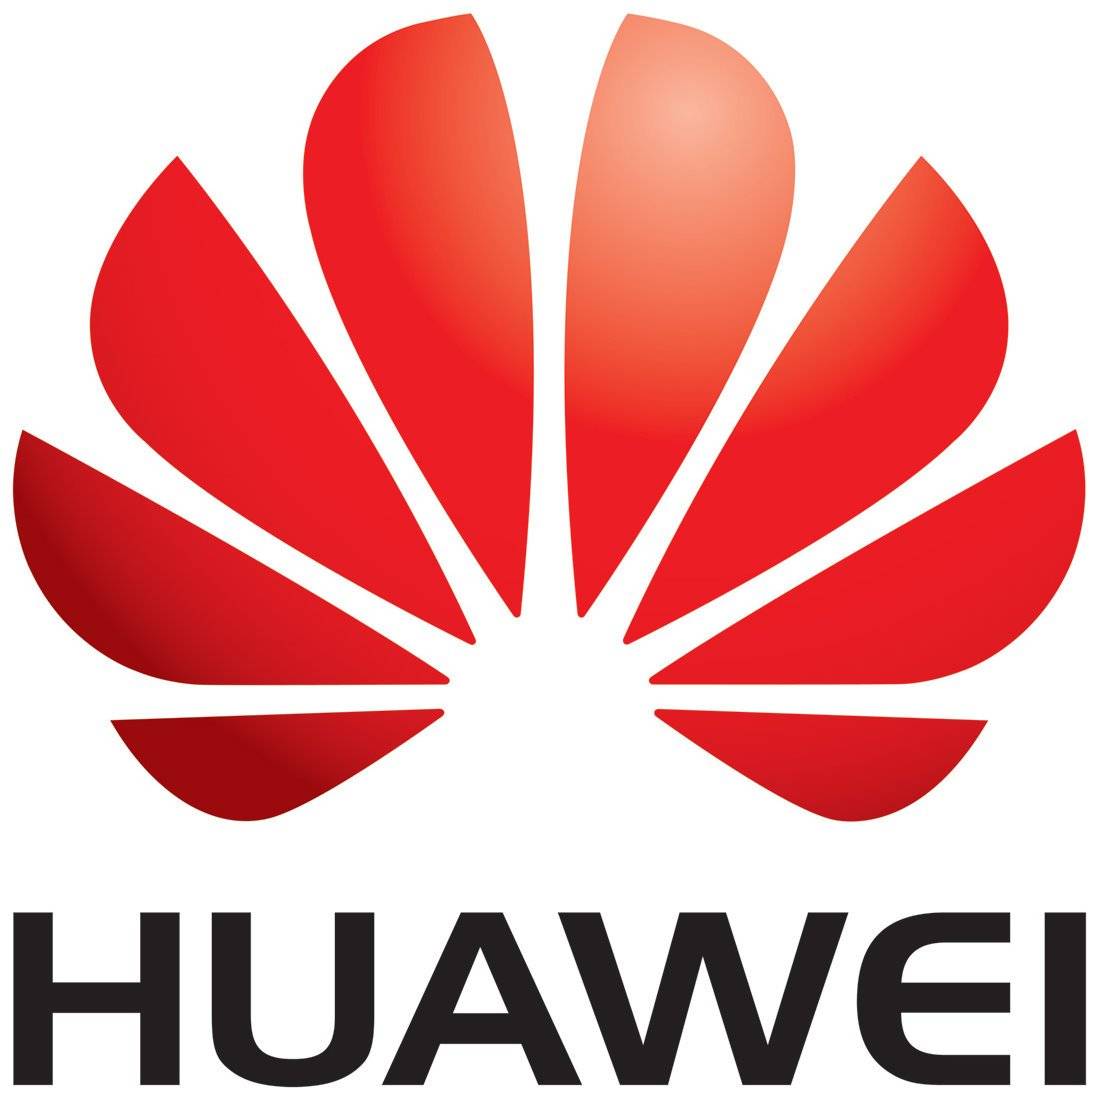 HUAWEI_logo.jpg 